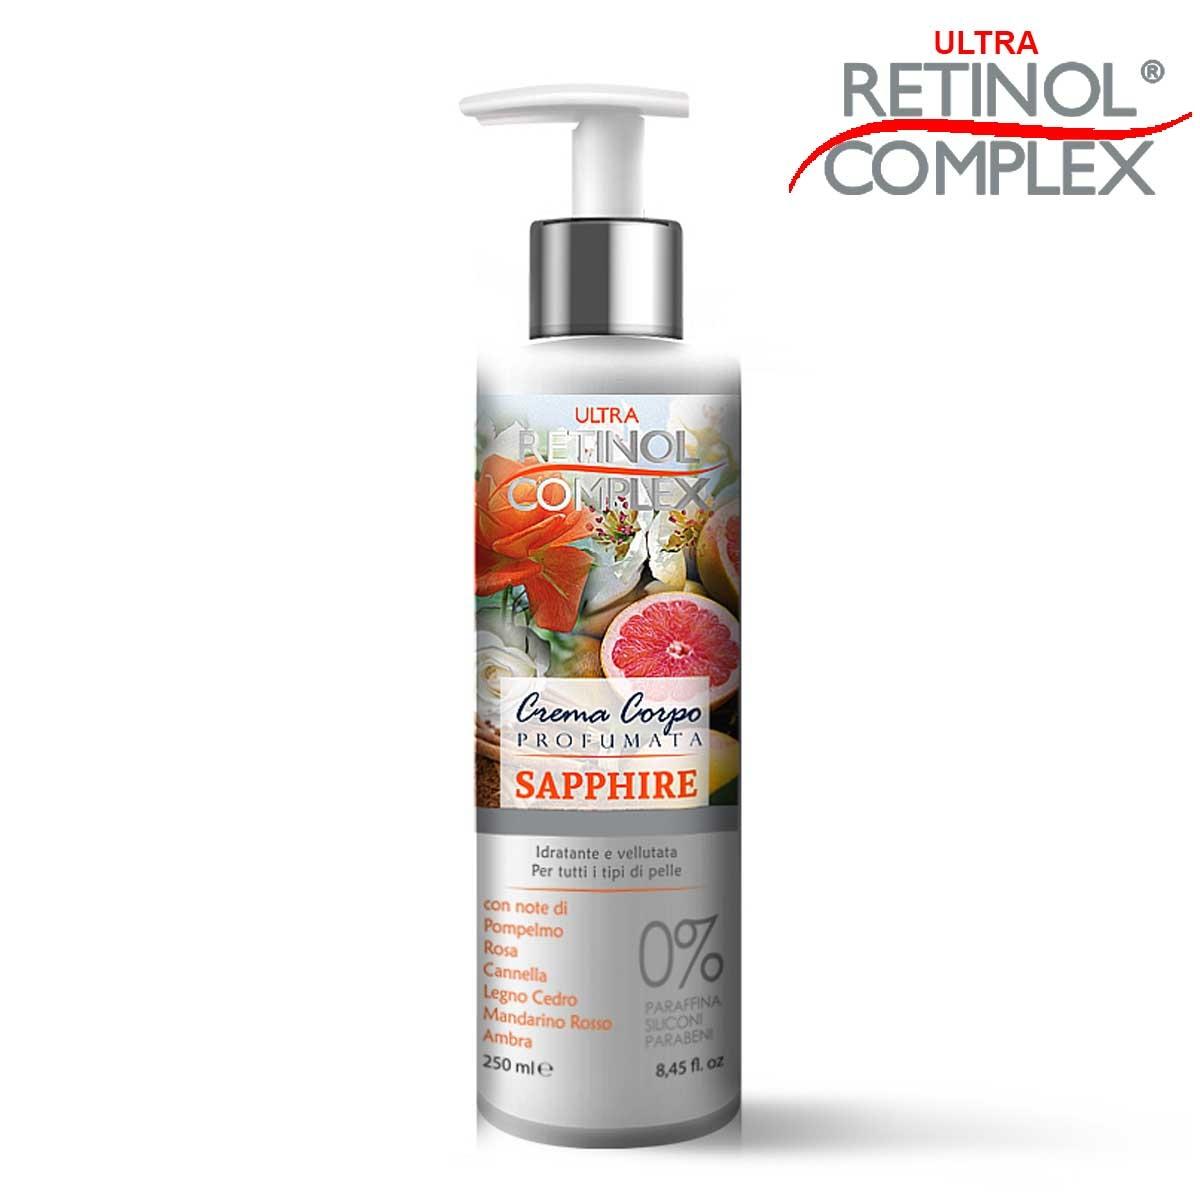 Retinol complex crema corpo 200 ml sapphire